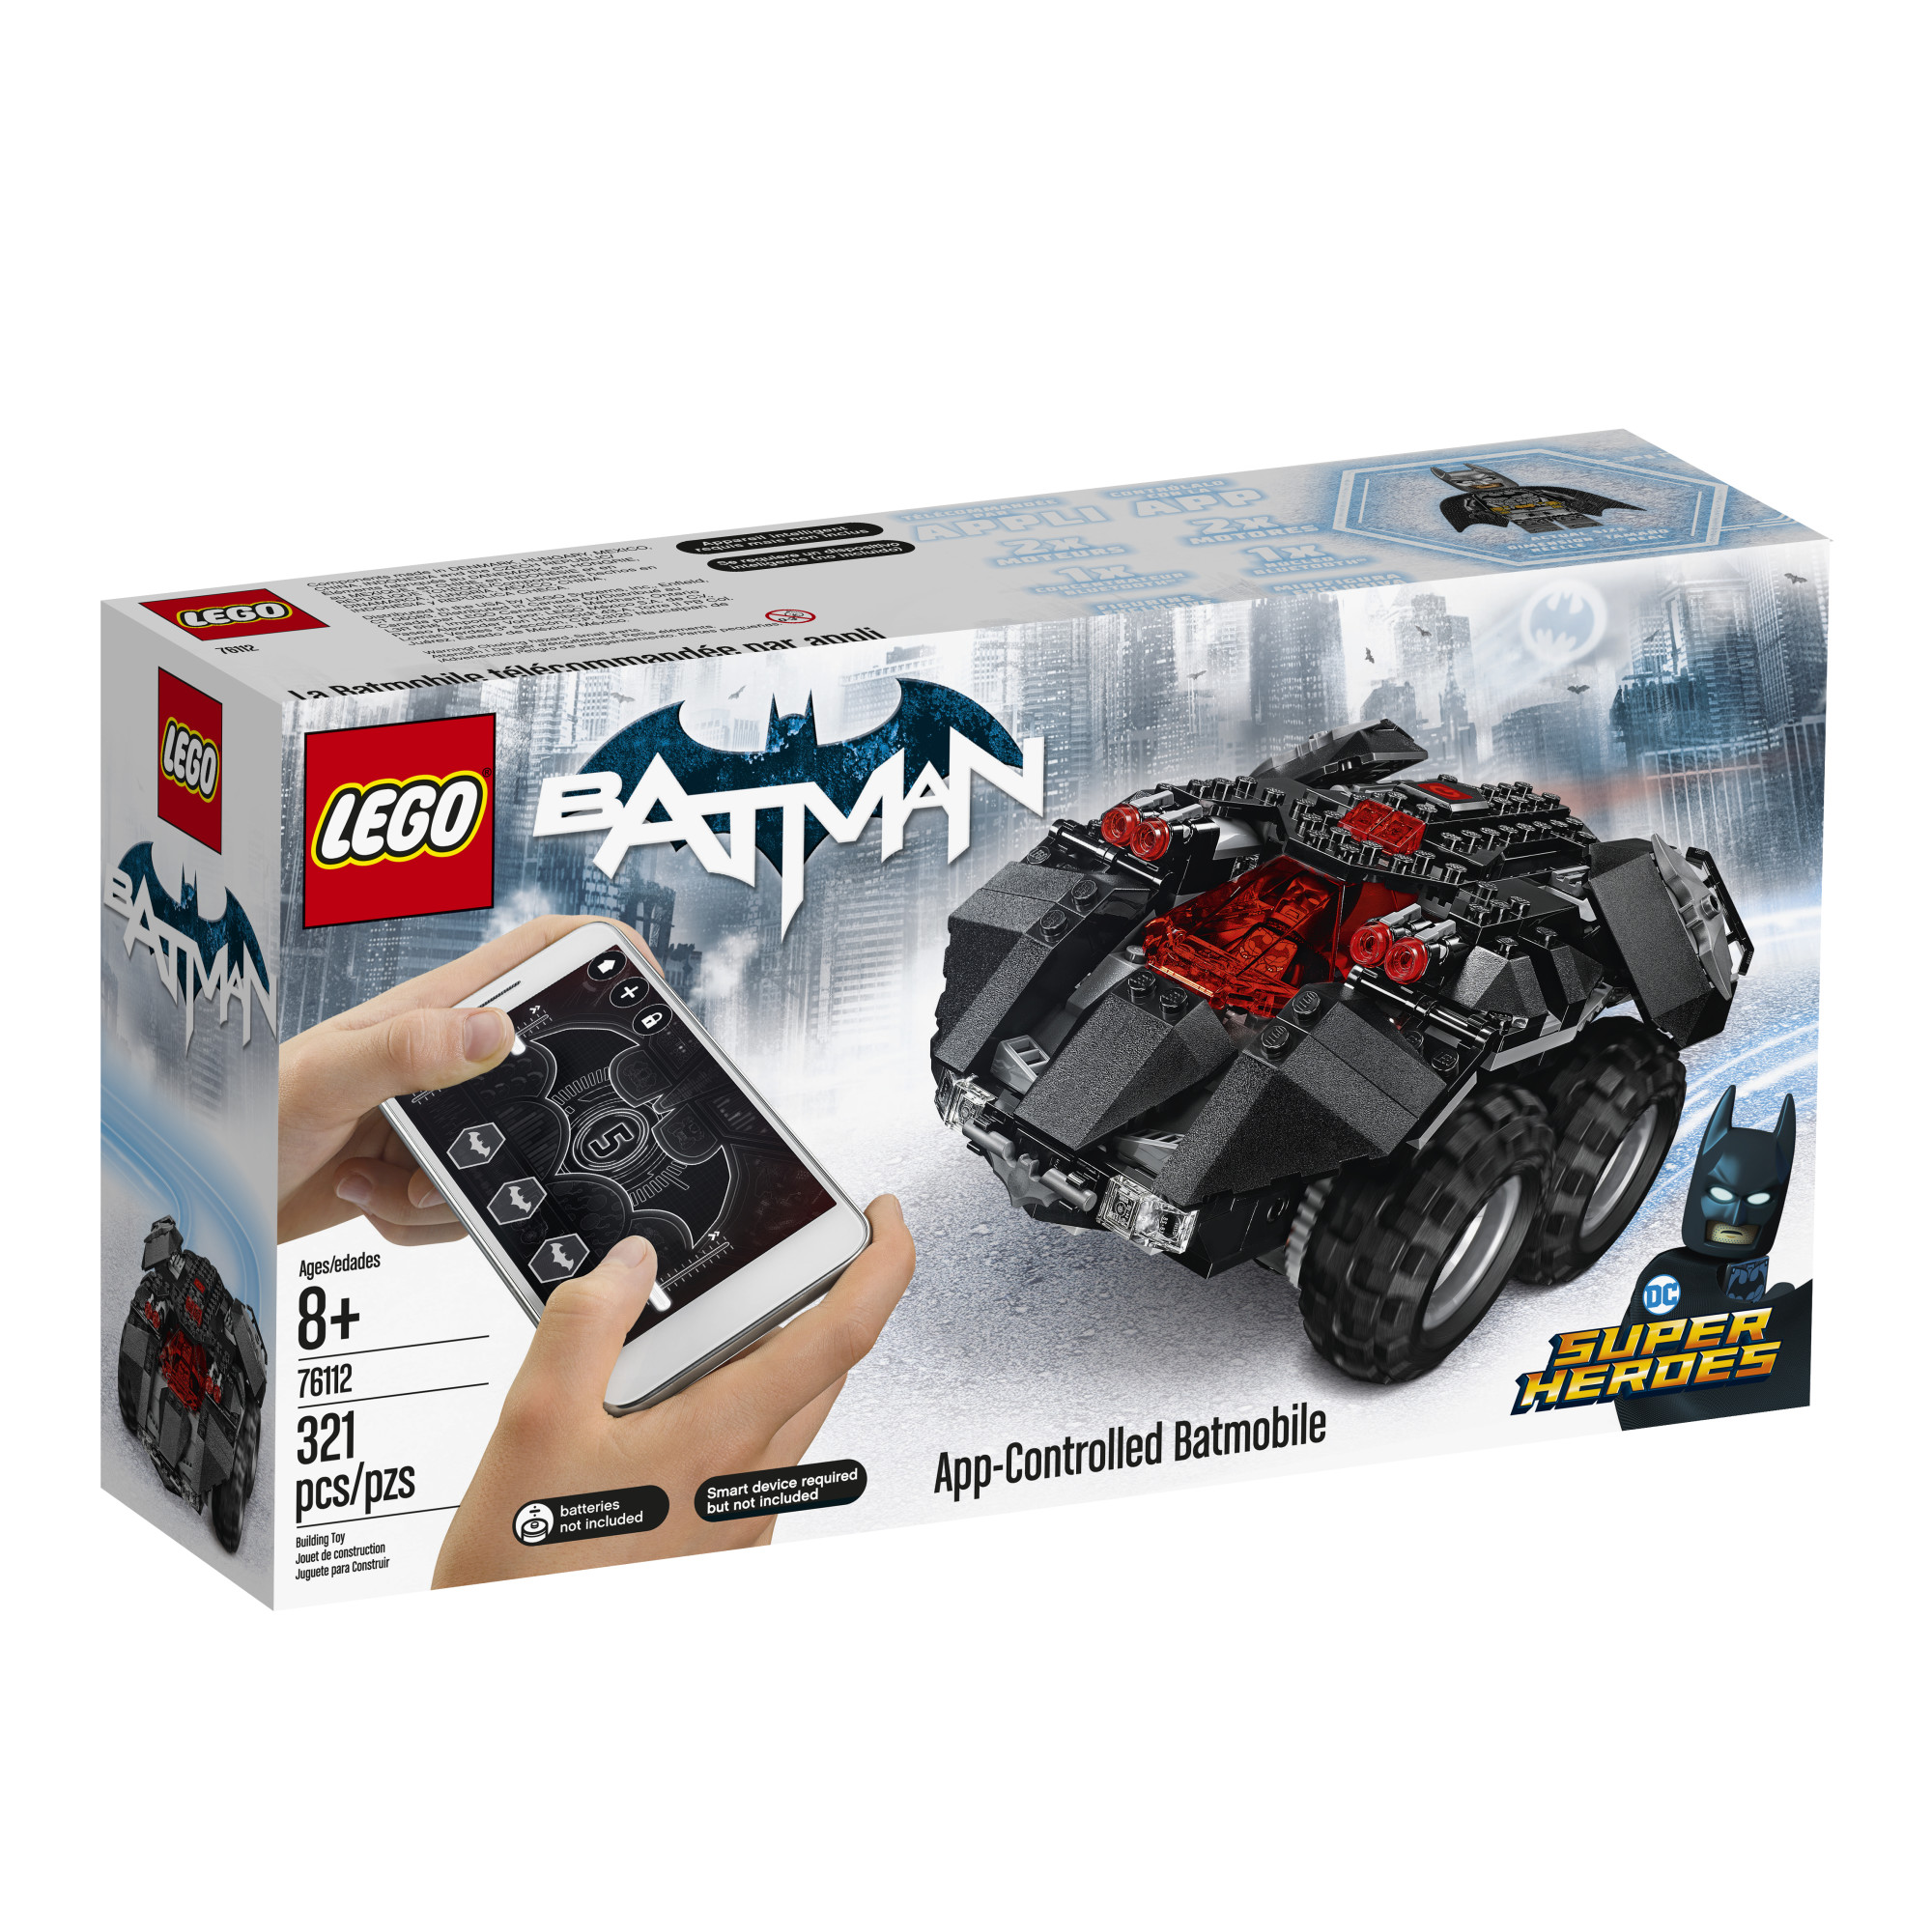 LEGO Super Heroes App-Controlled Batmobile - 76112